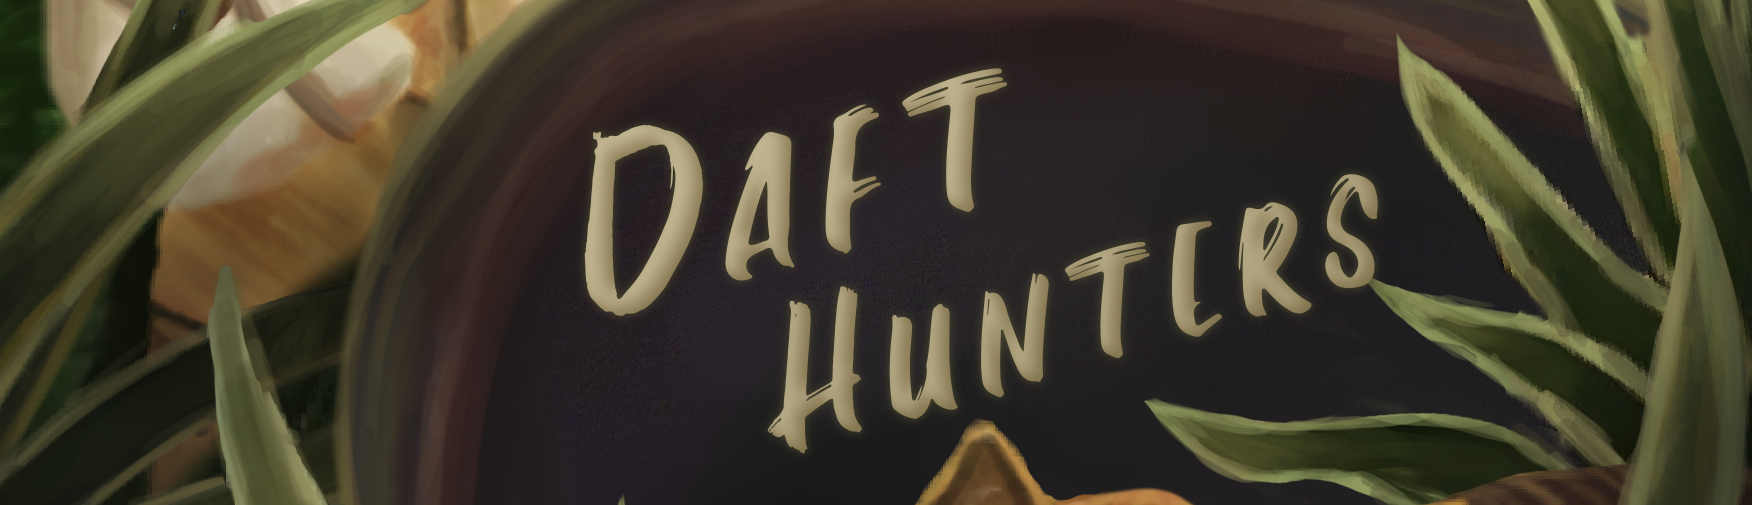 Daft Hunter